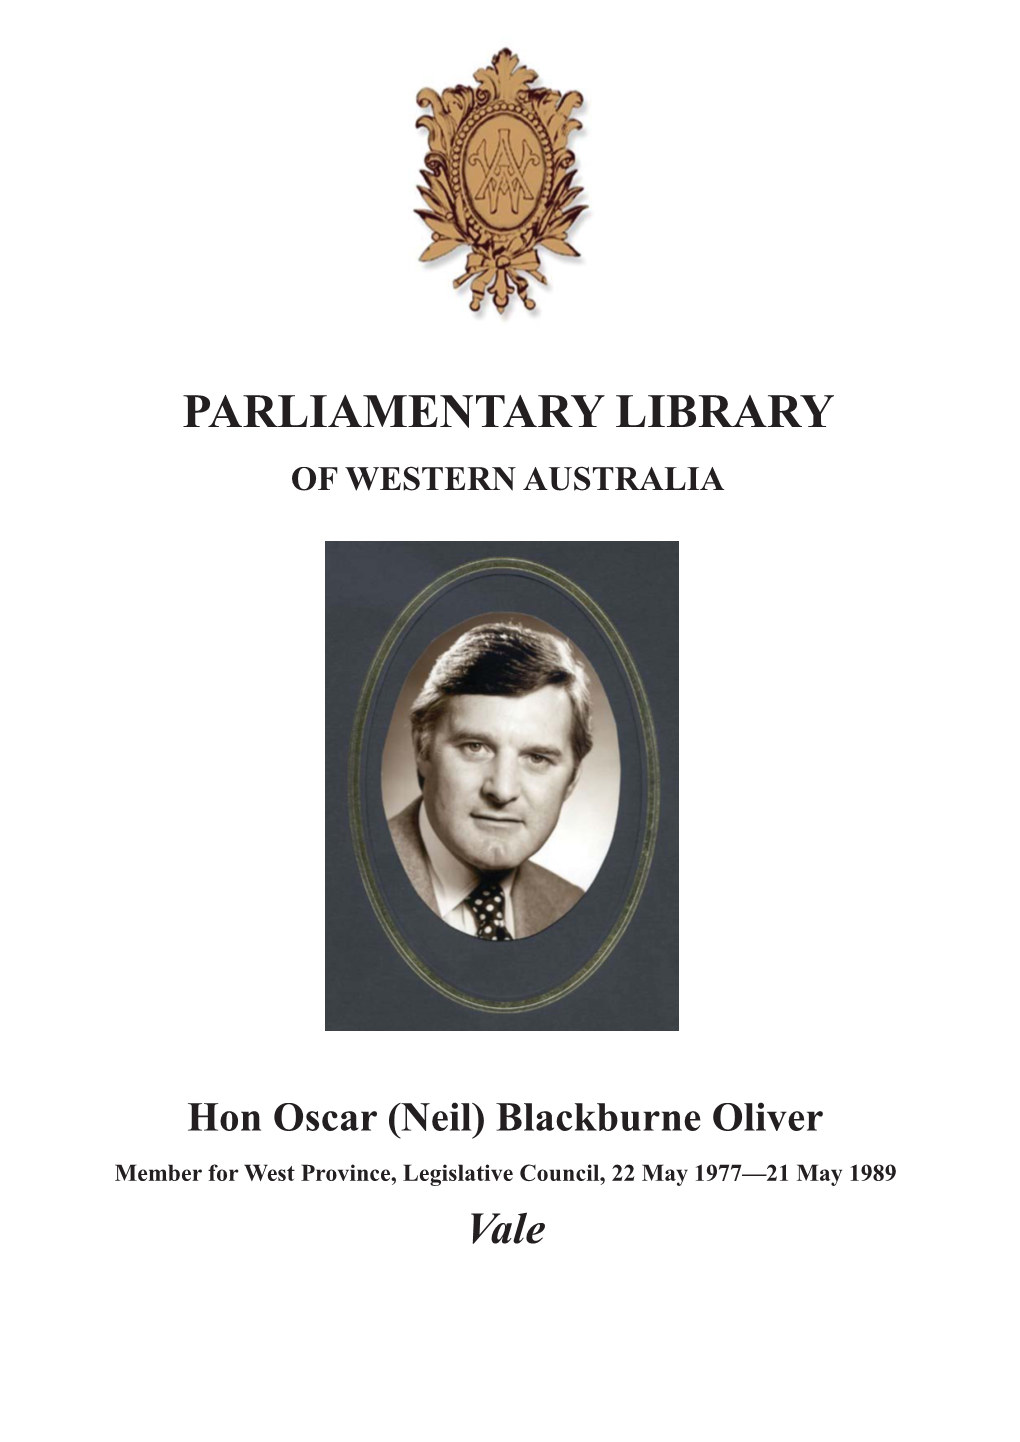 Parliamentary Library of Western Australia